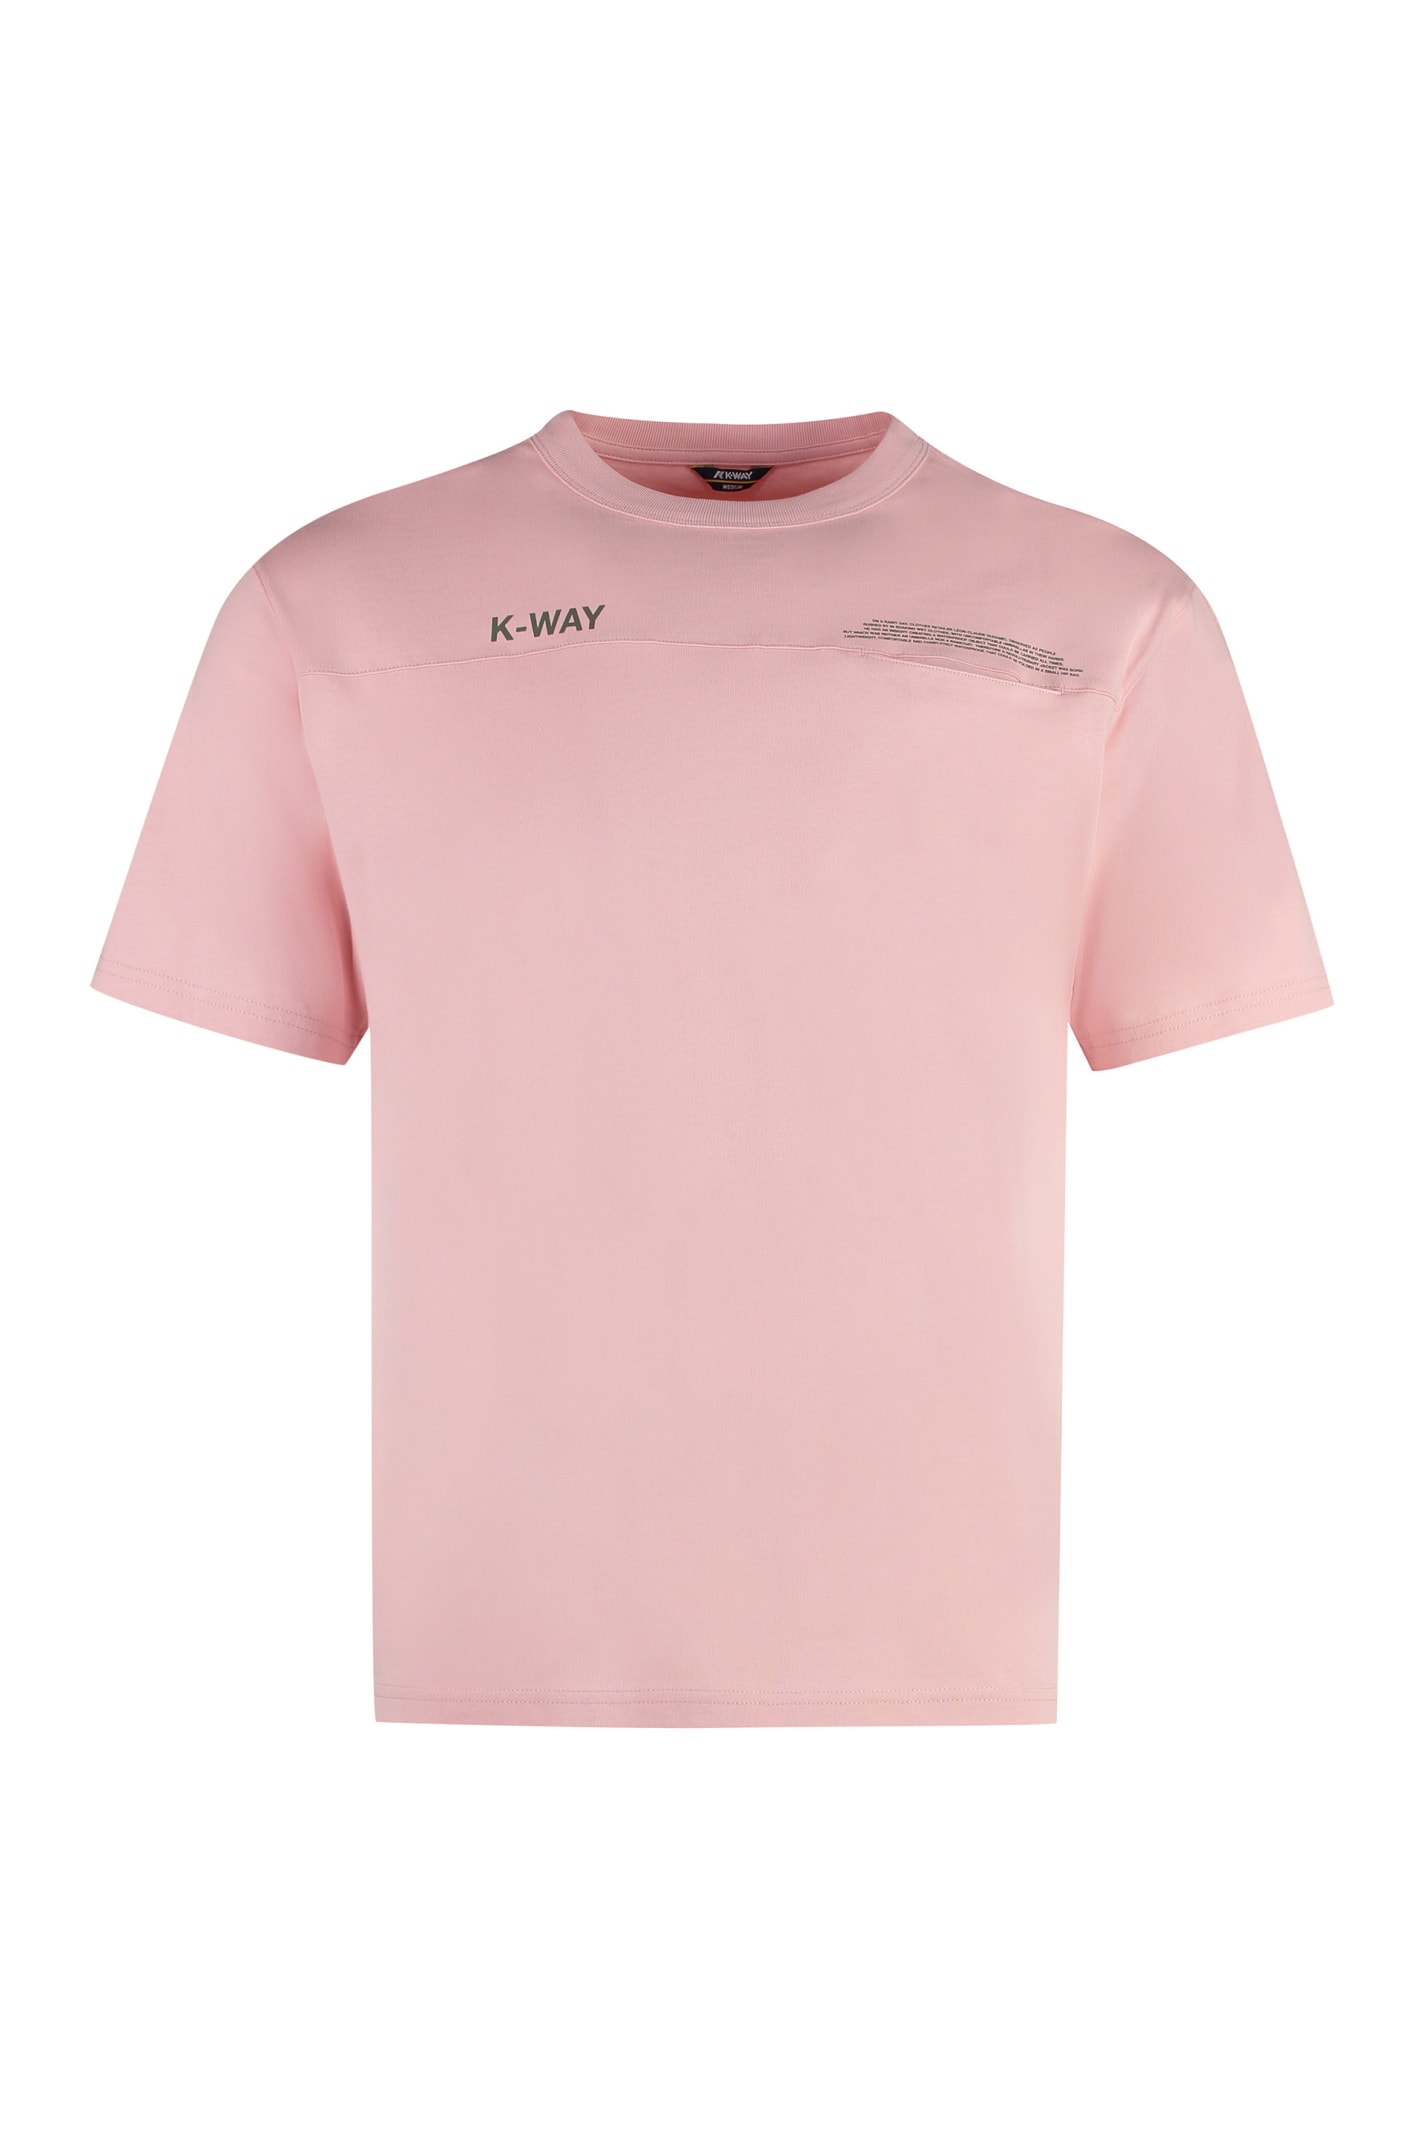 K-way Fantome Cotton T-shirt In Pink